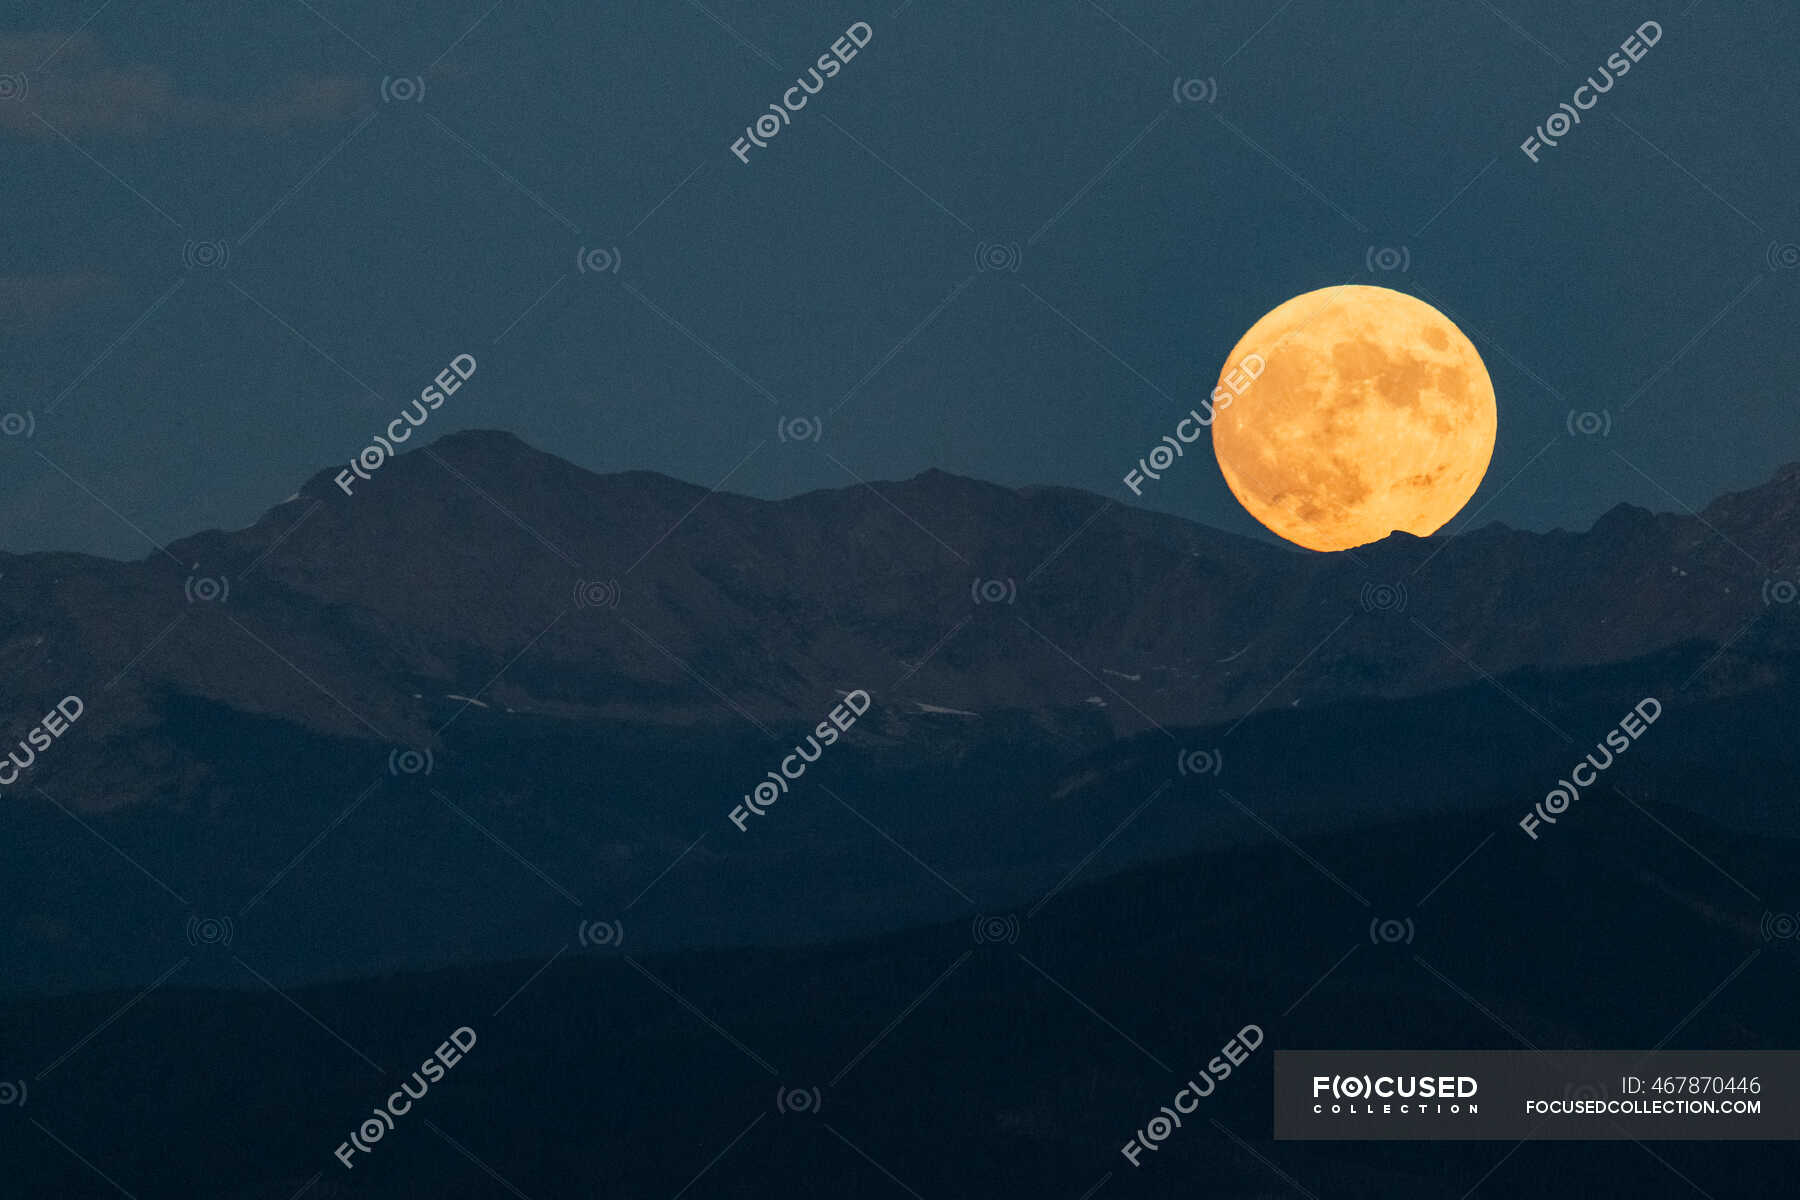 Idyllic Shot Of Full Moon Over Mountain Range Against Clear Sky At Dusk